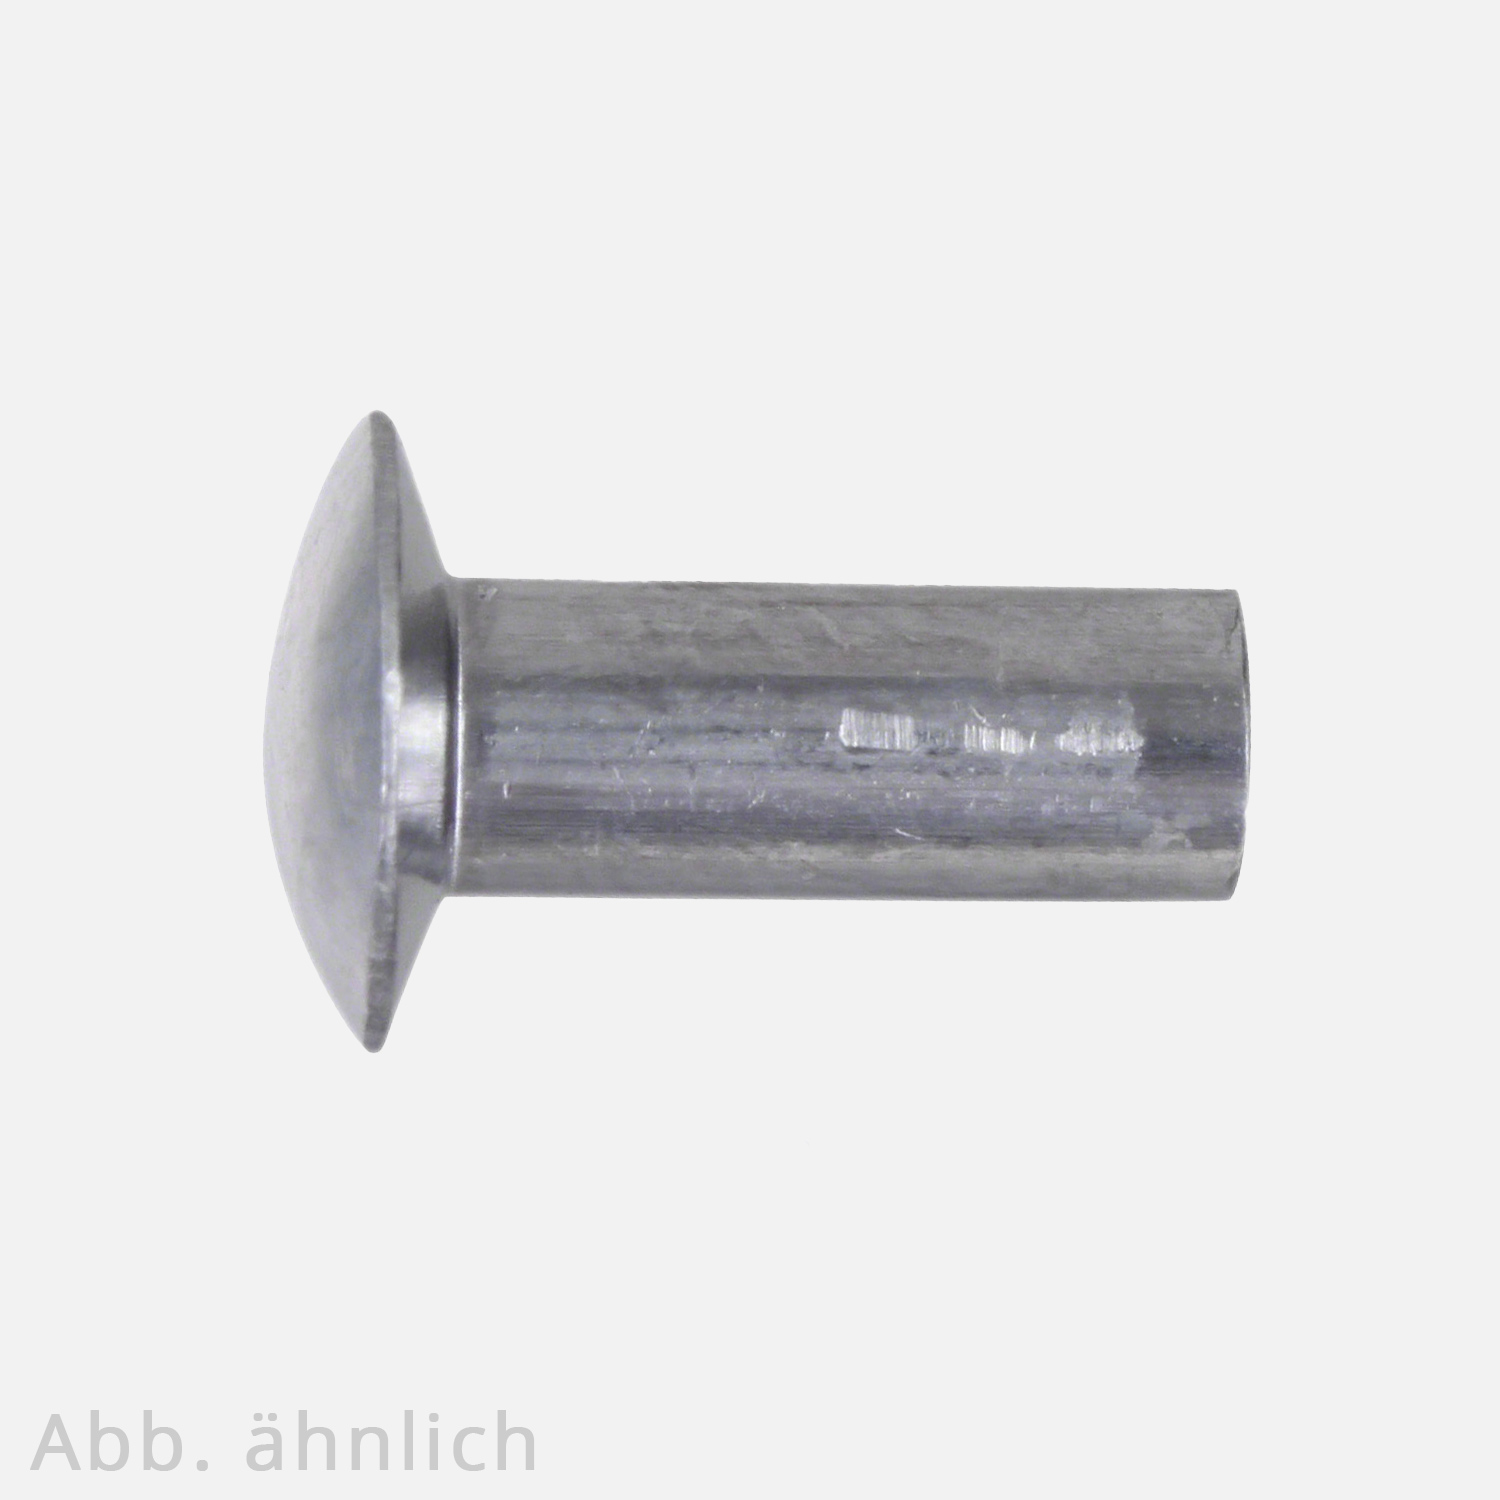 1000 Linsennieten 3,5x8 mm - DIN 662 - Aluminium 99.5